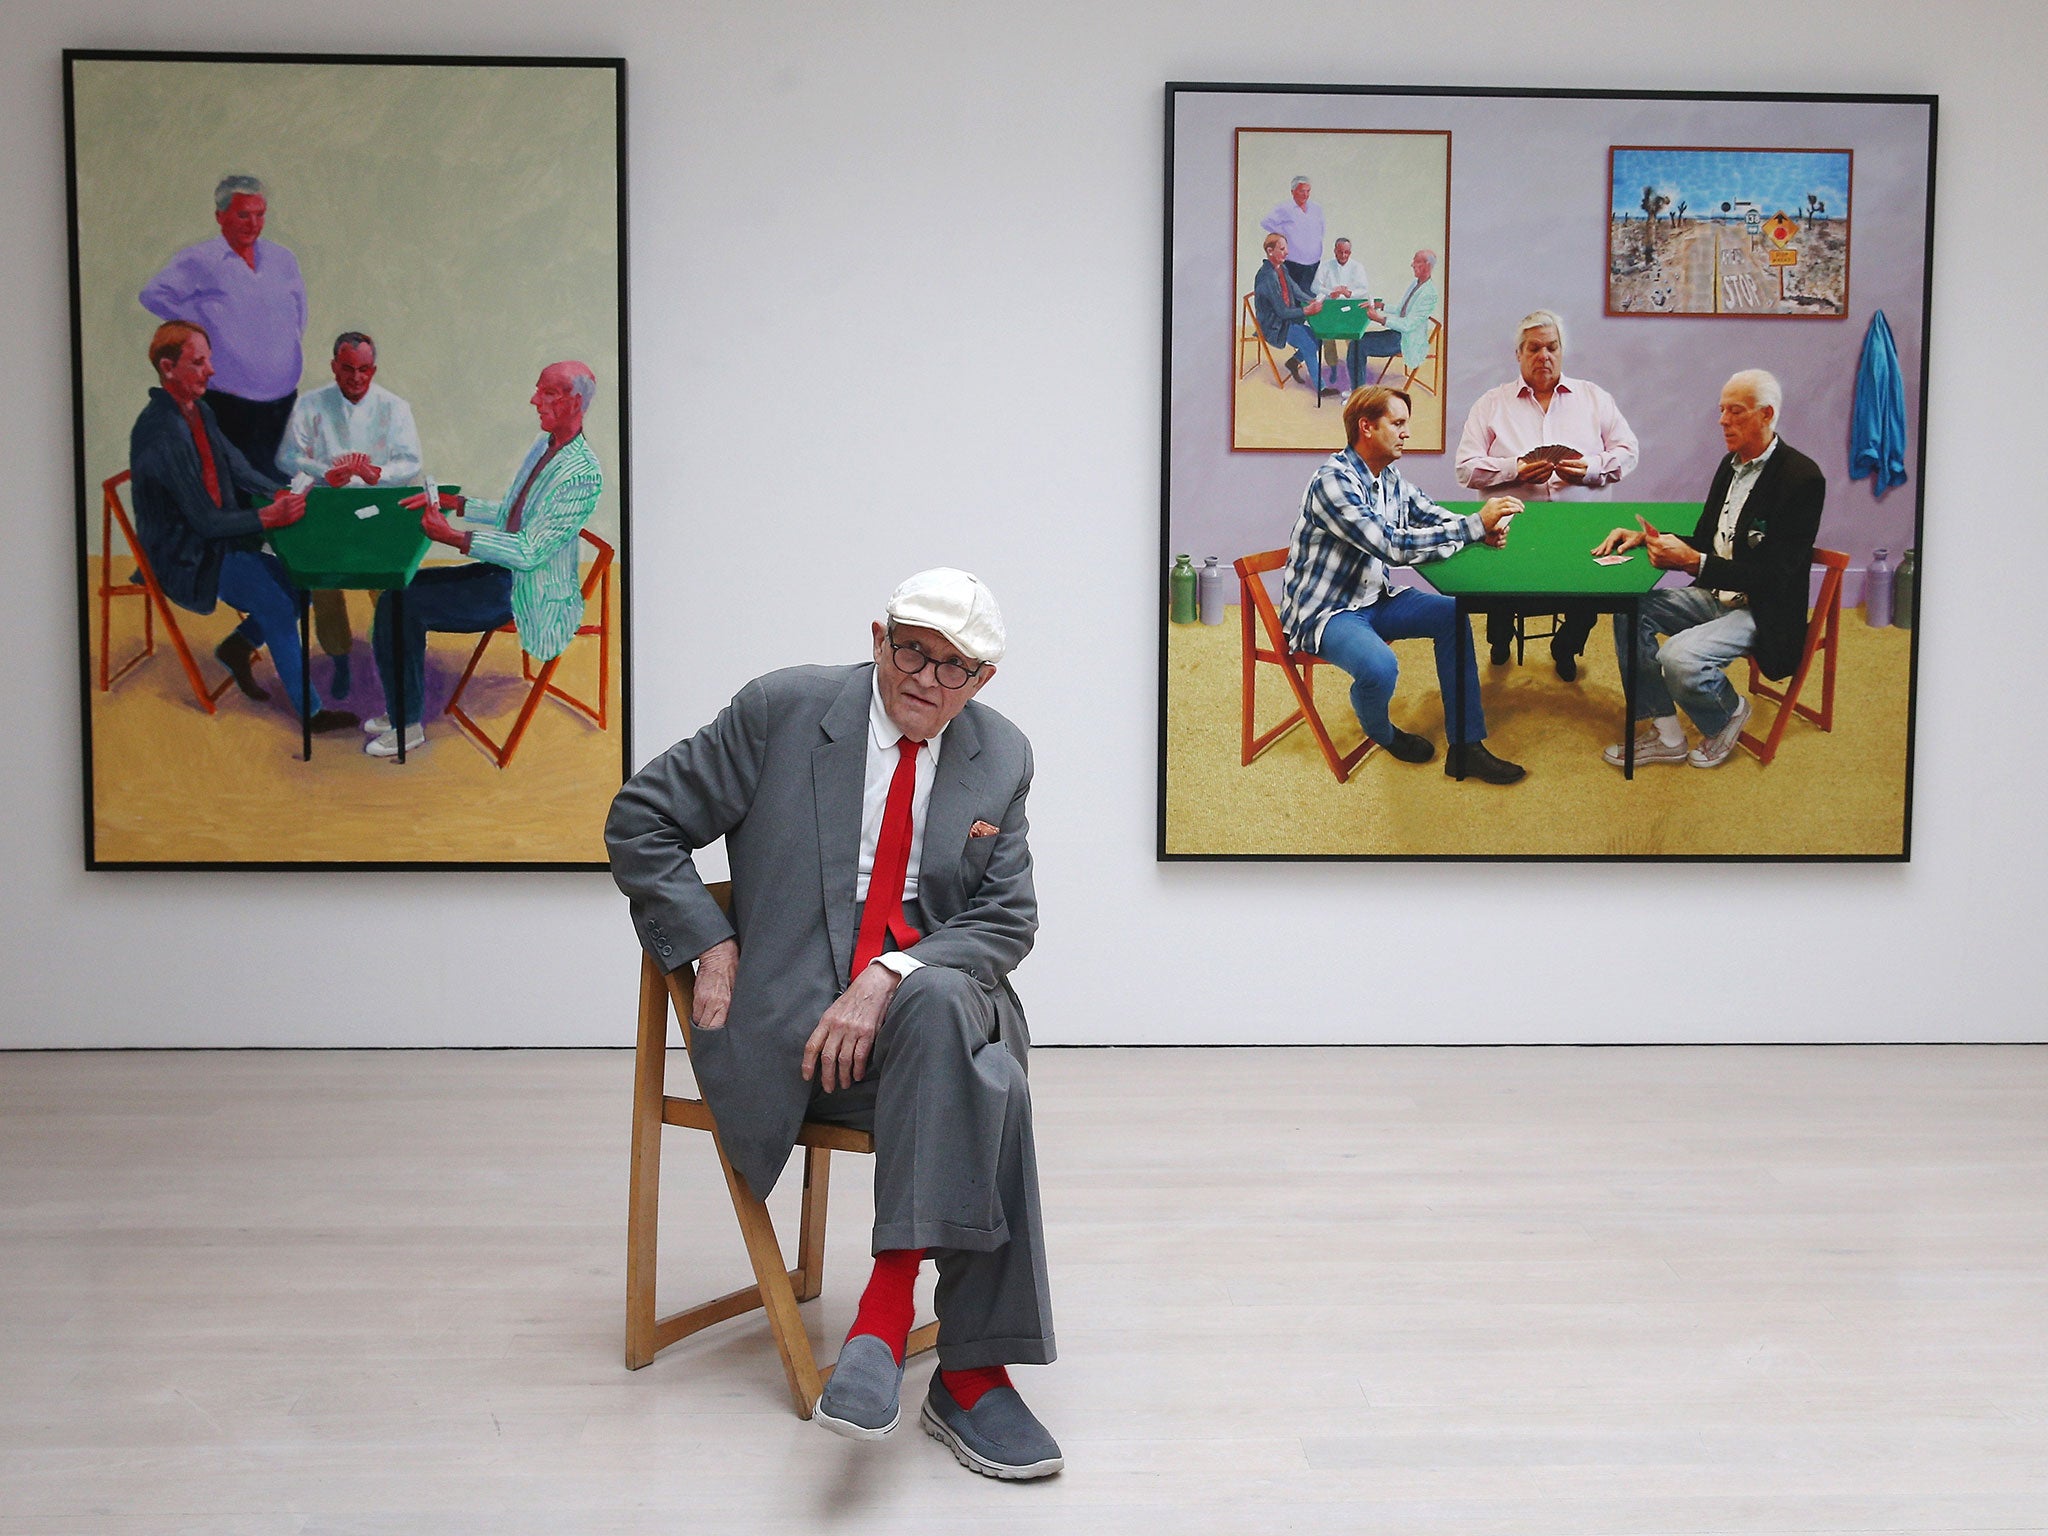 David Hockney: Tate Britain to chart 'unique' artist's six-decade